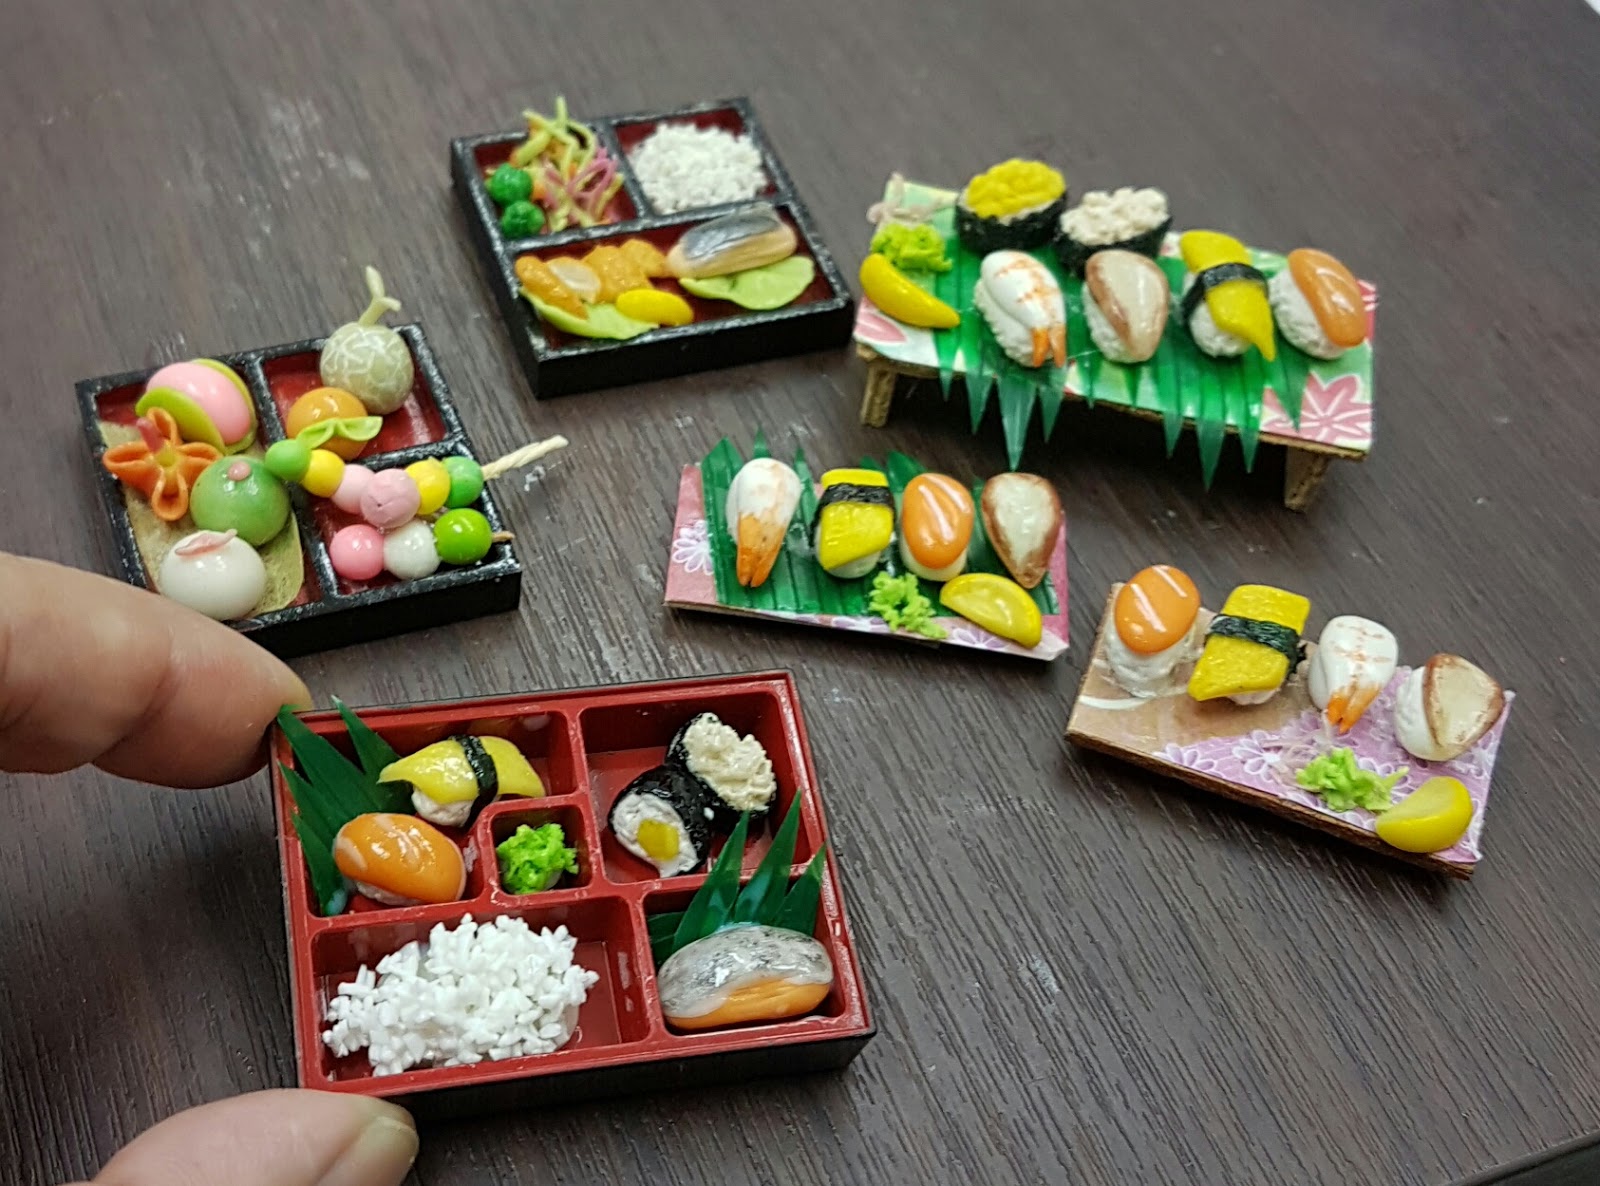 Kin' Miniature Workshop Handmade Clay Food by Kin Quek. Have Fun With Clay!